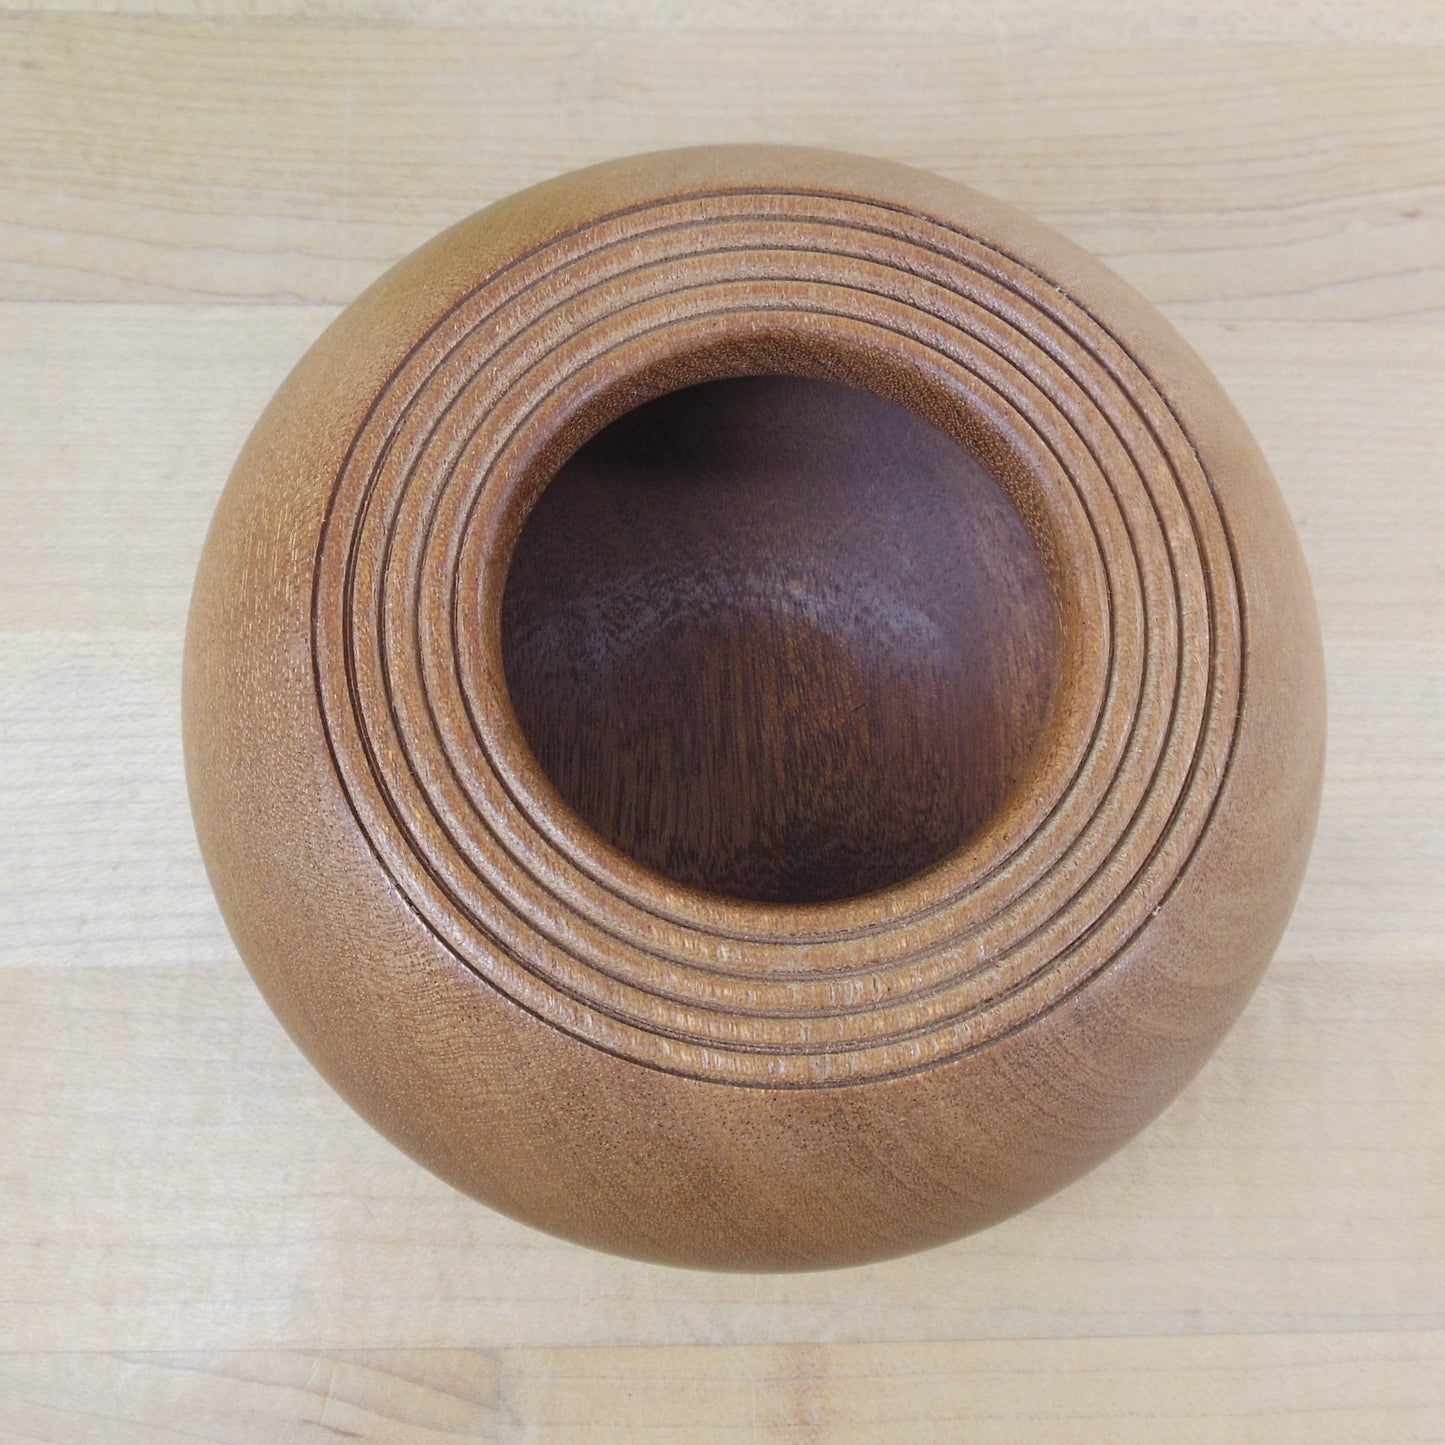 Pete Signed 2016 Sapele Turned Wood Small Bowl Rim Rings